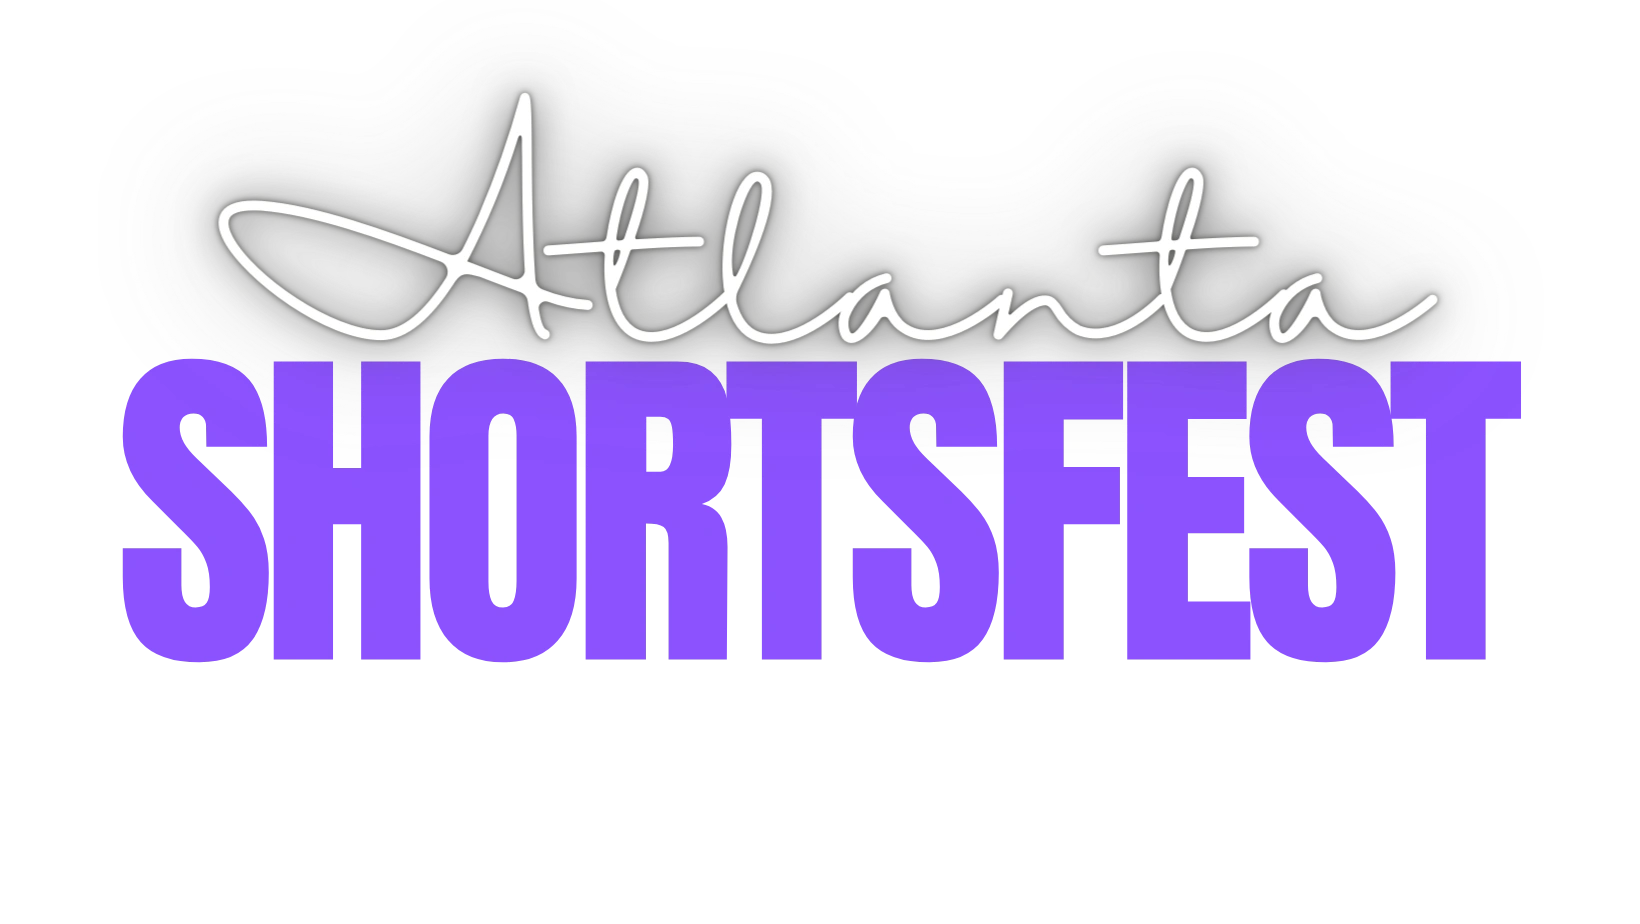 (c) Atlantashortsfest.com